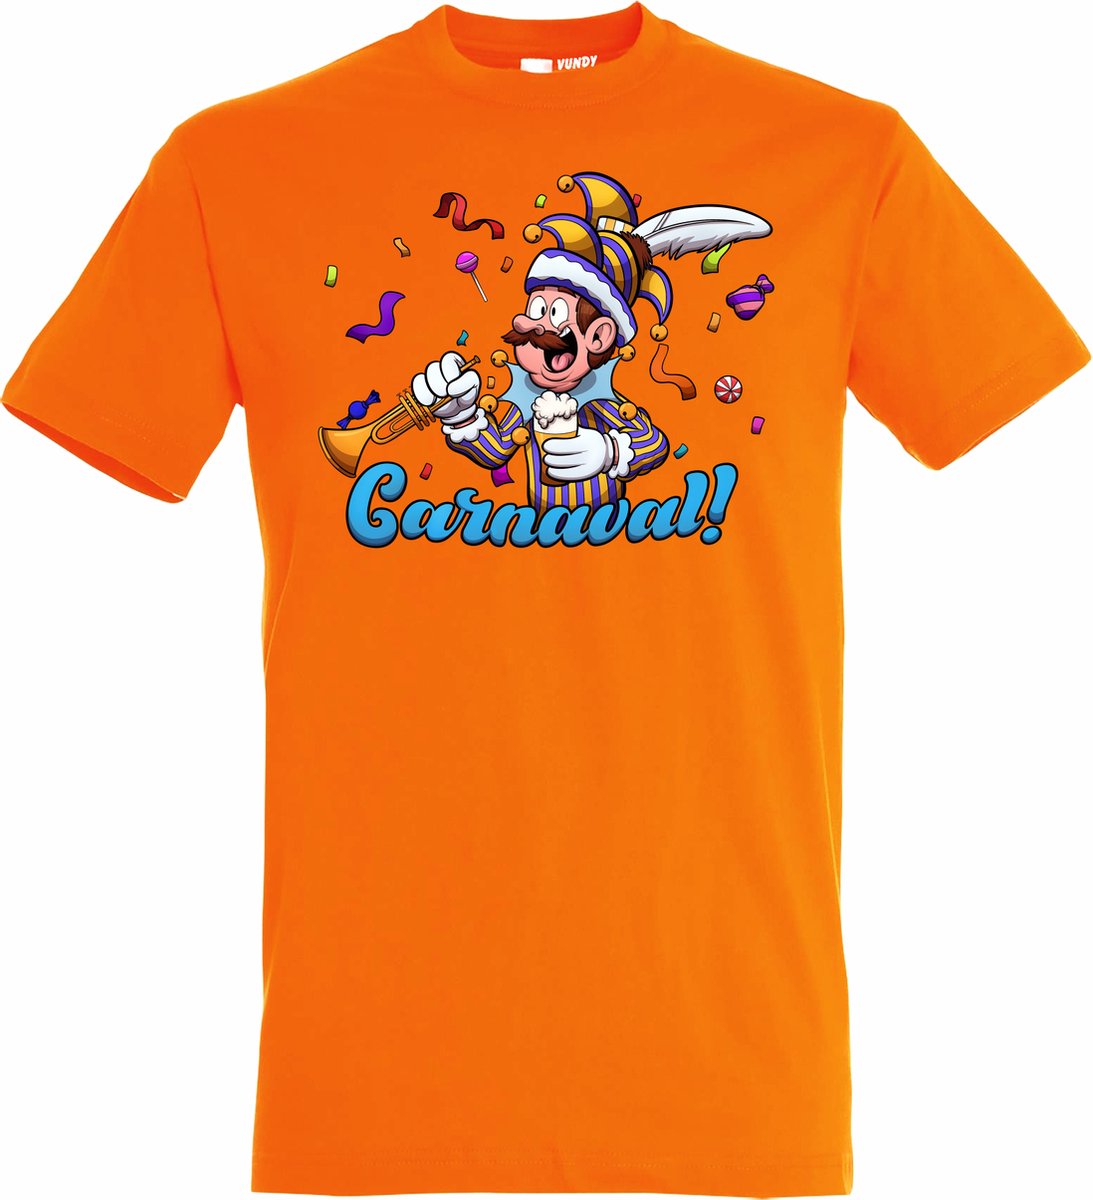 T-shirt kinderen Carnavalluh | Carnaval | Carnavalskleding Kinderen Baby | Oranje | maat 152